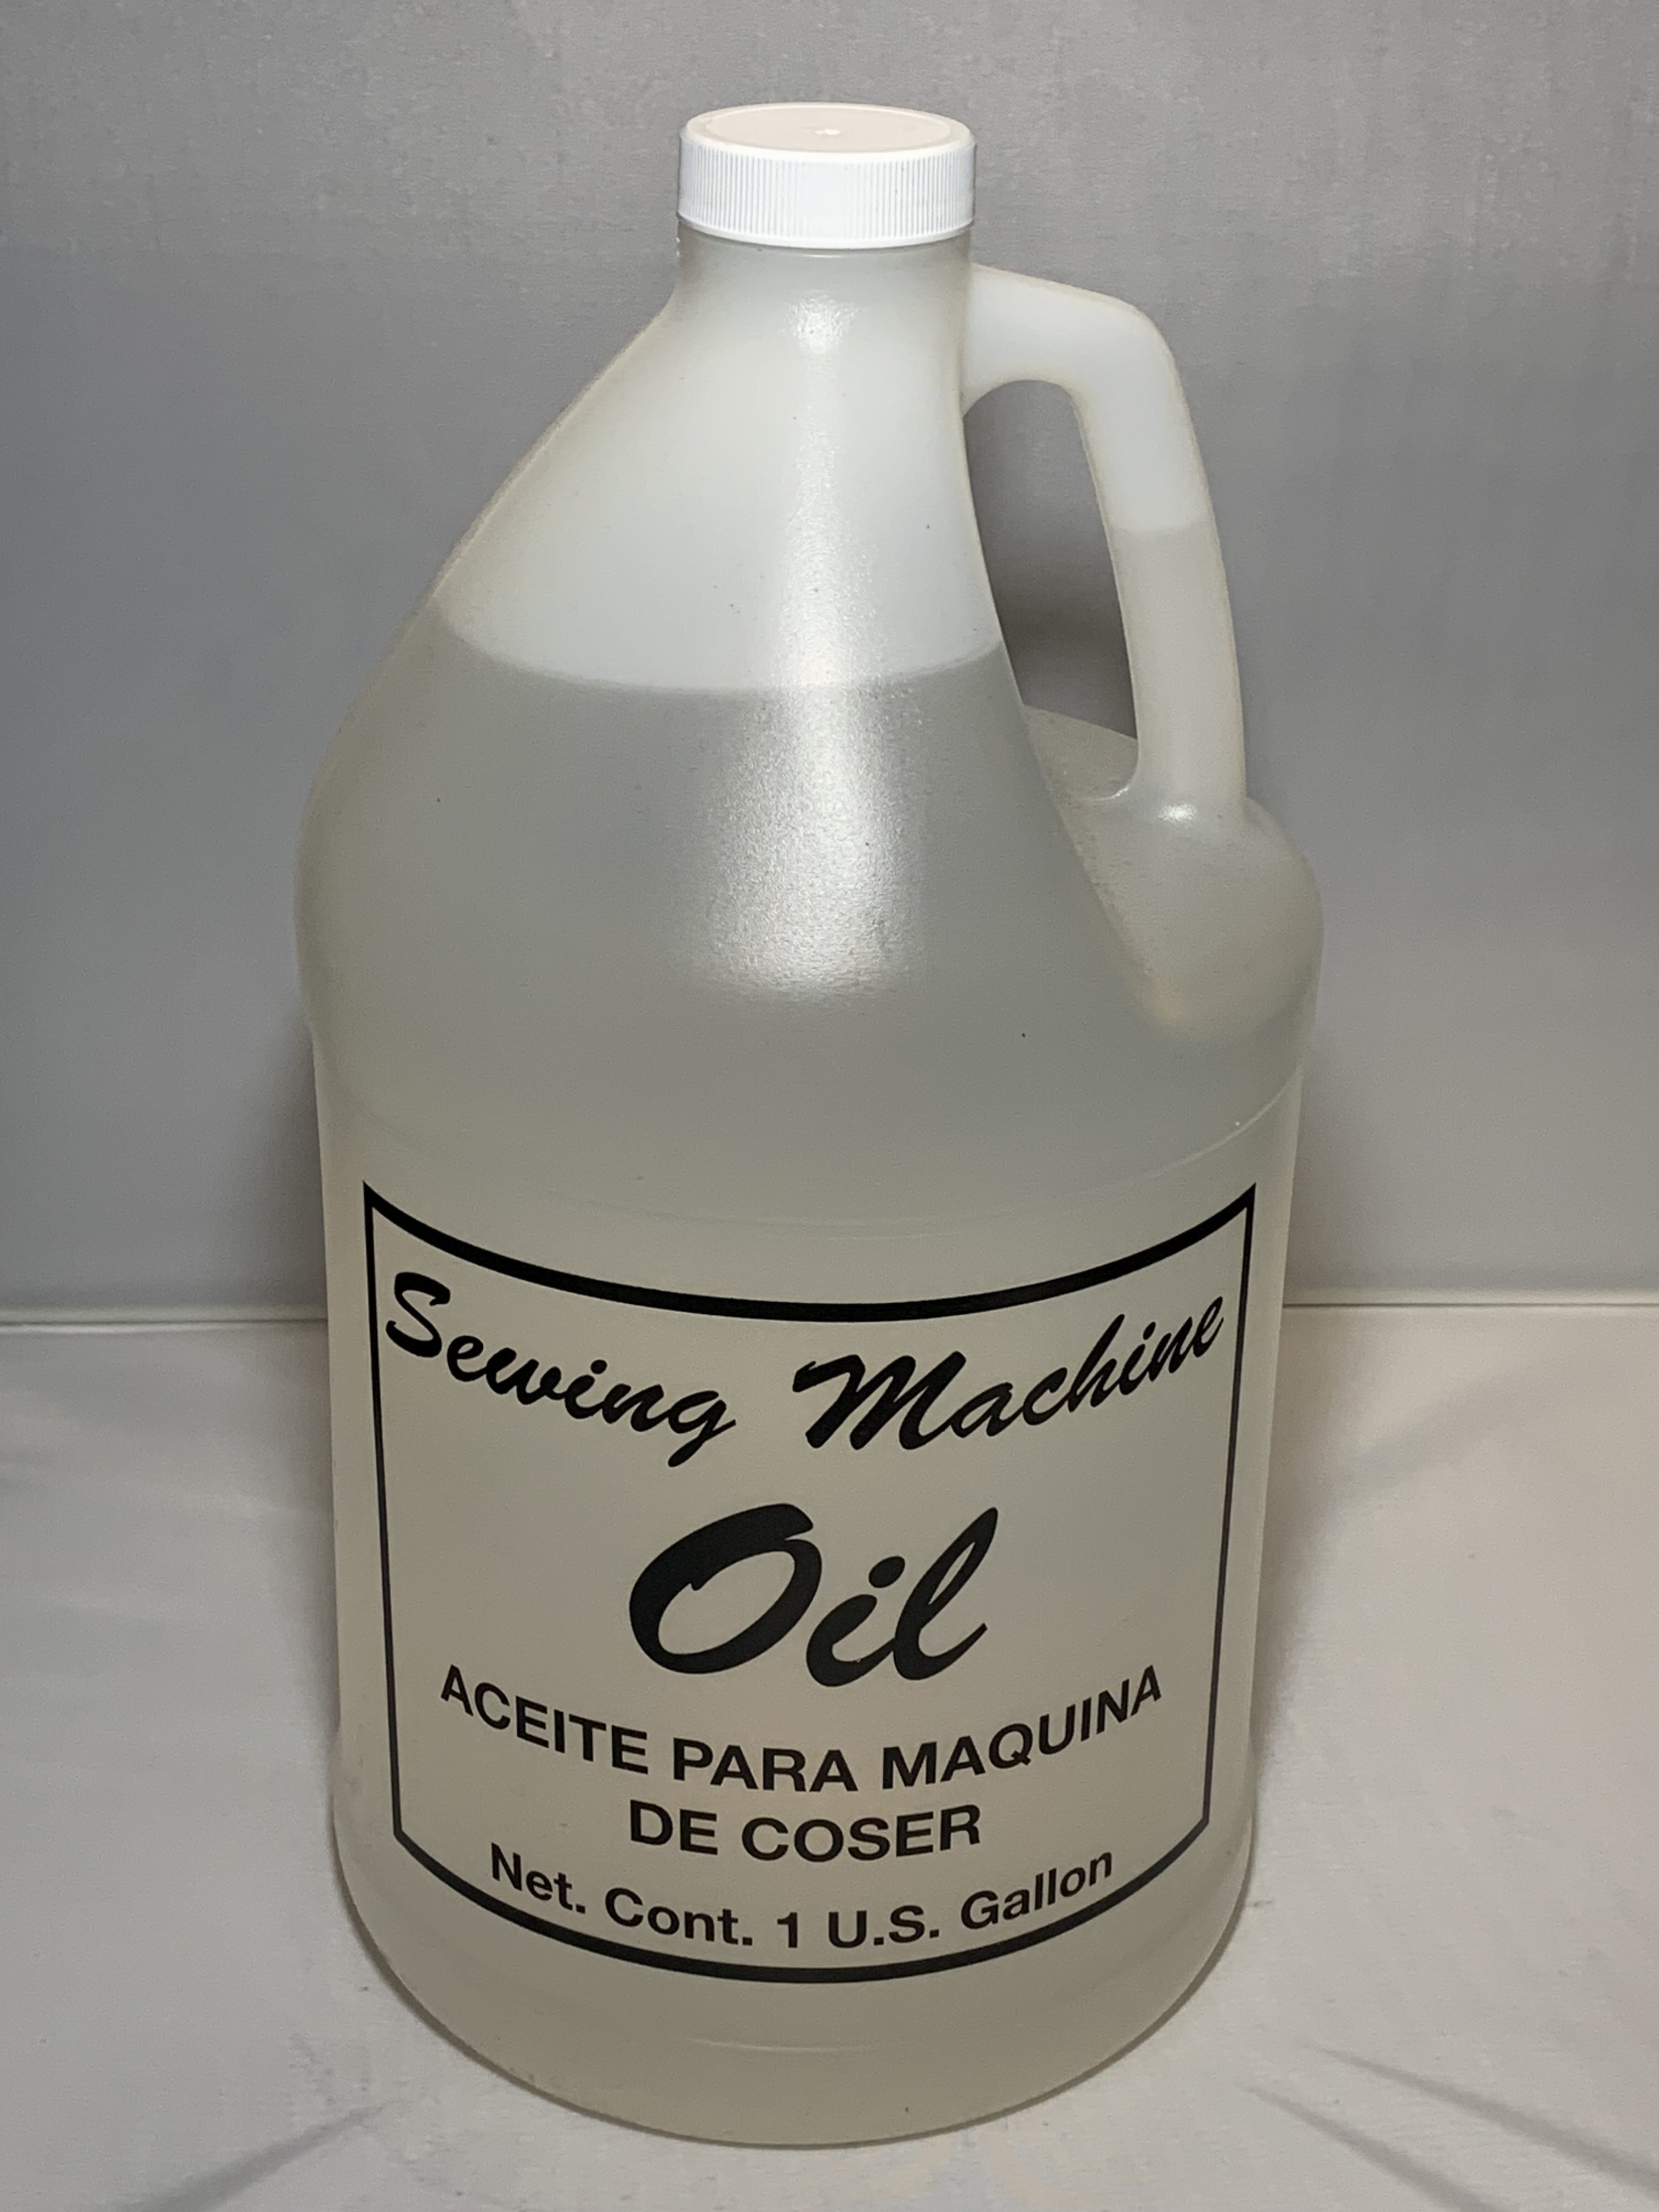 Gallon of Sewing Machine Oil / Aceite para maquina de coser